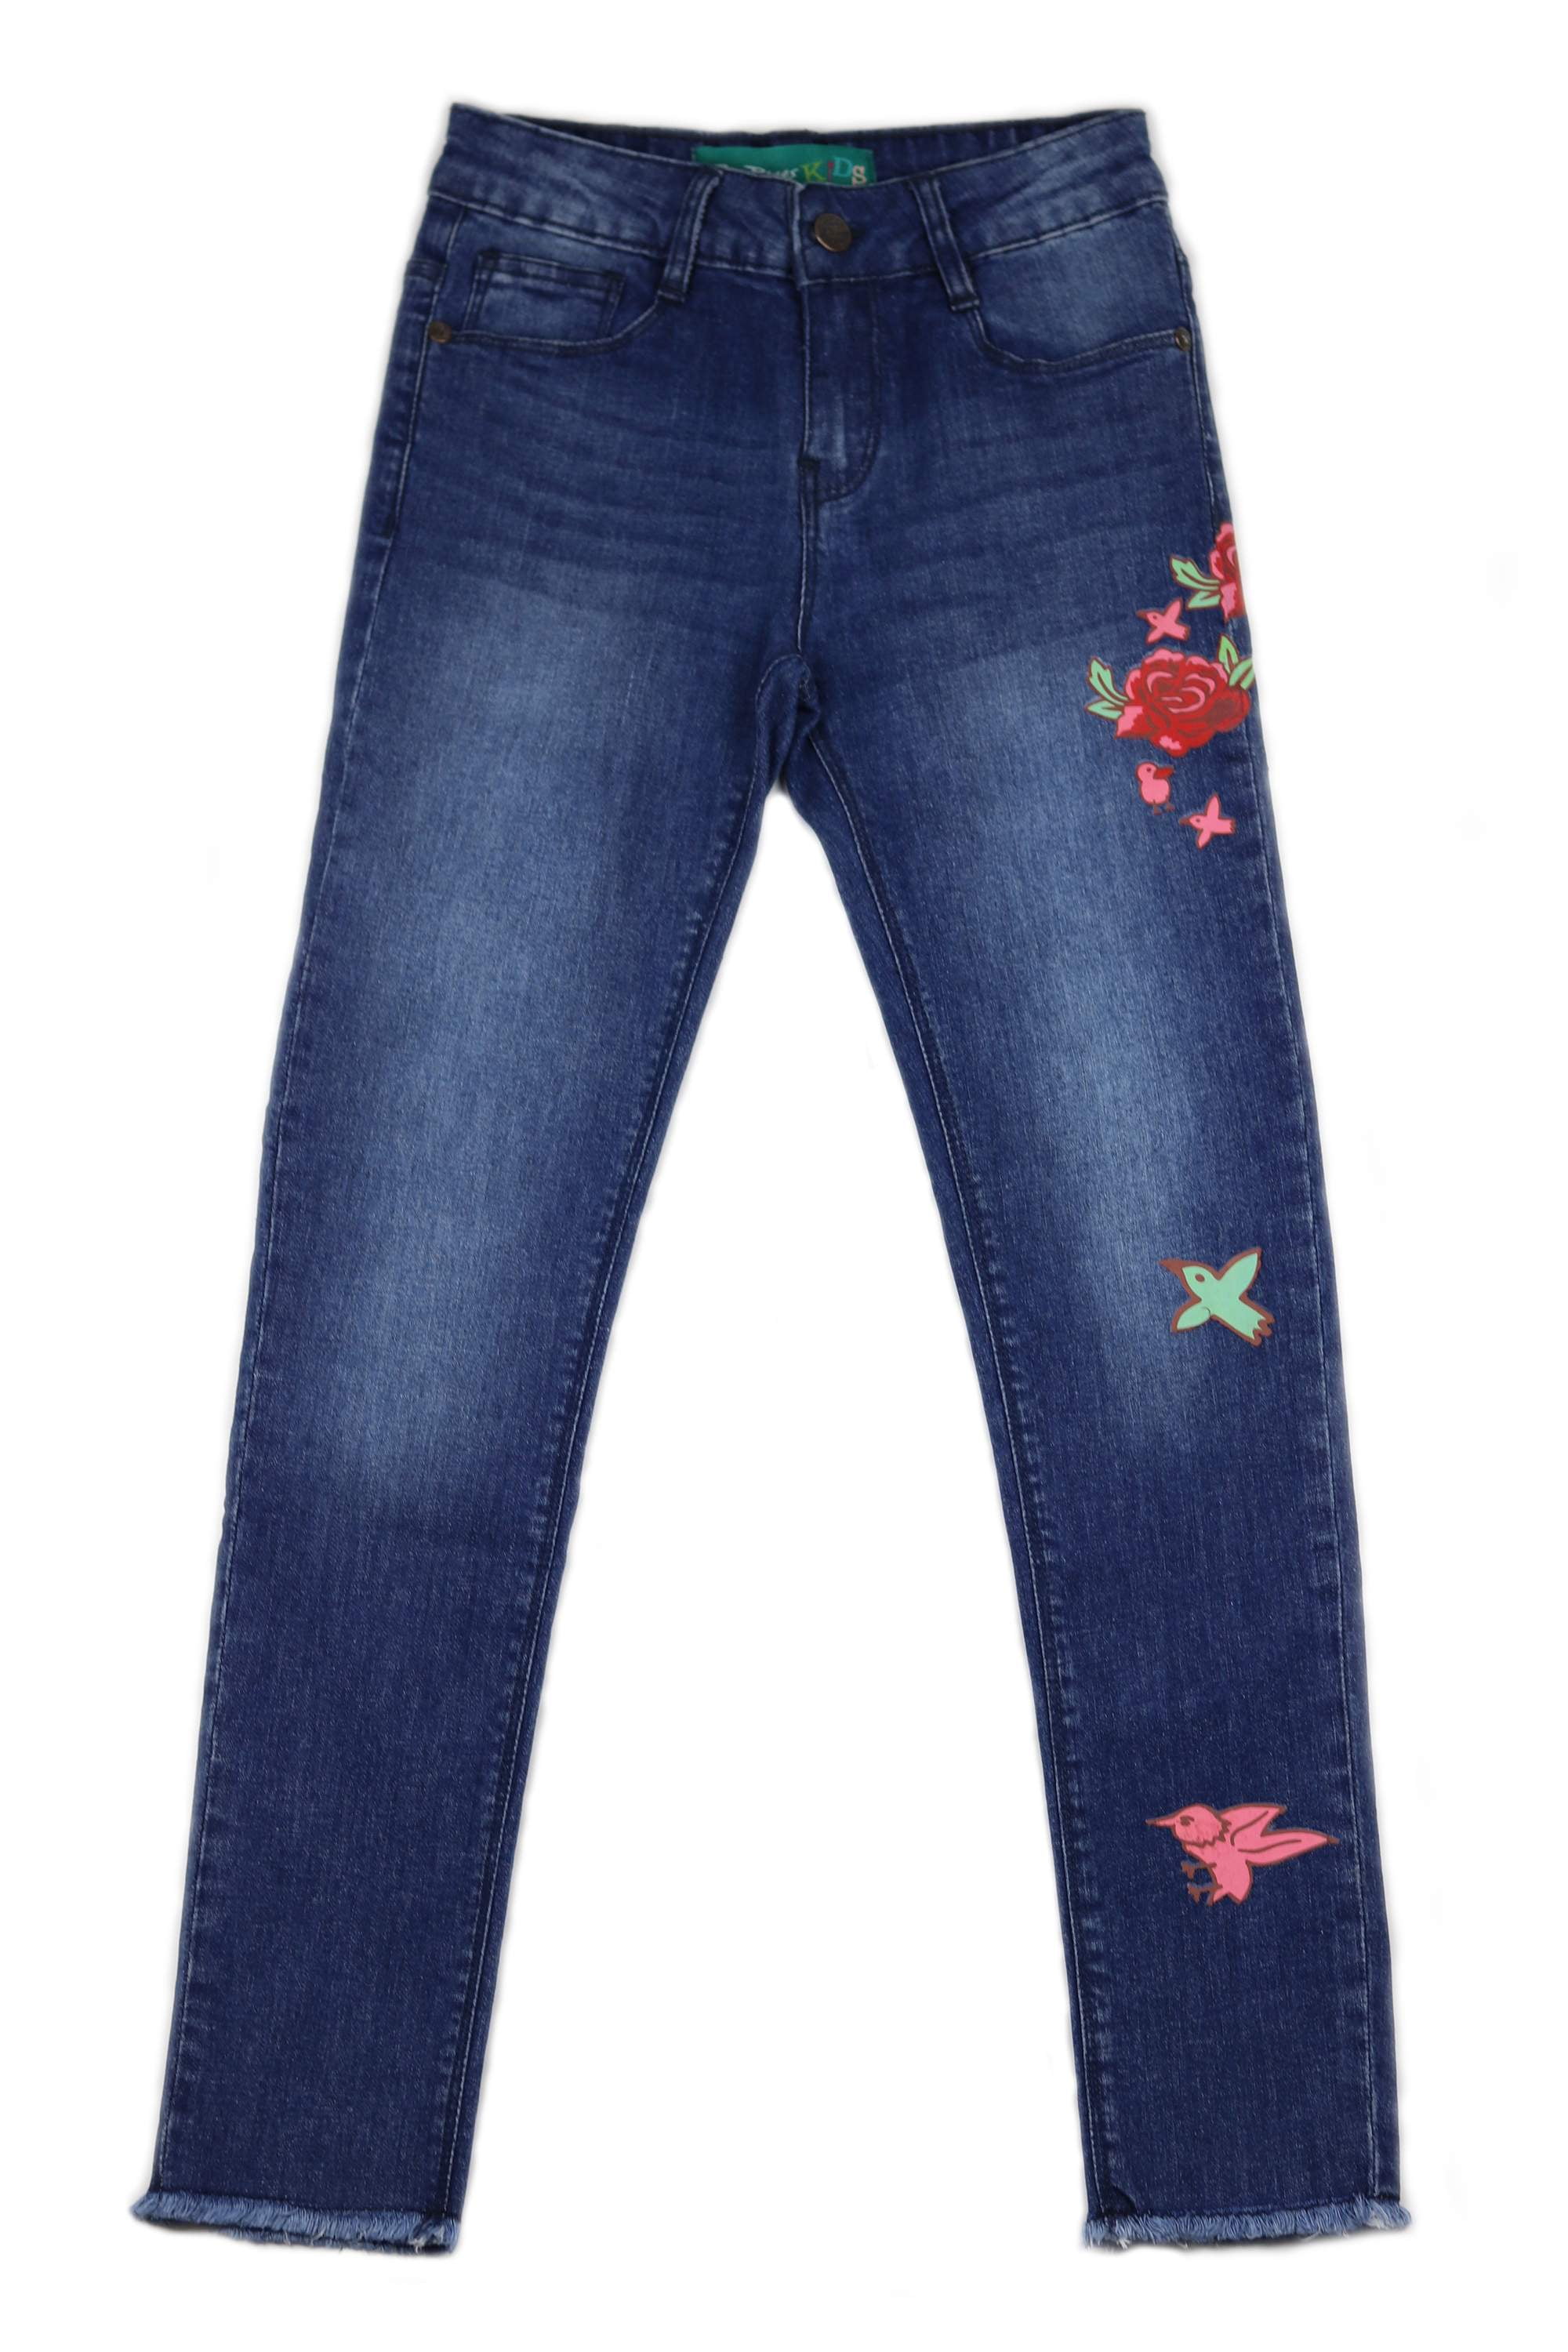 Girls' 7-16 Floral Print Skinny Jeans with Frayed Hem - Walmart.com